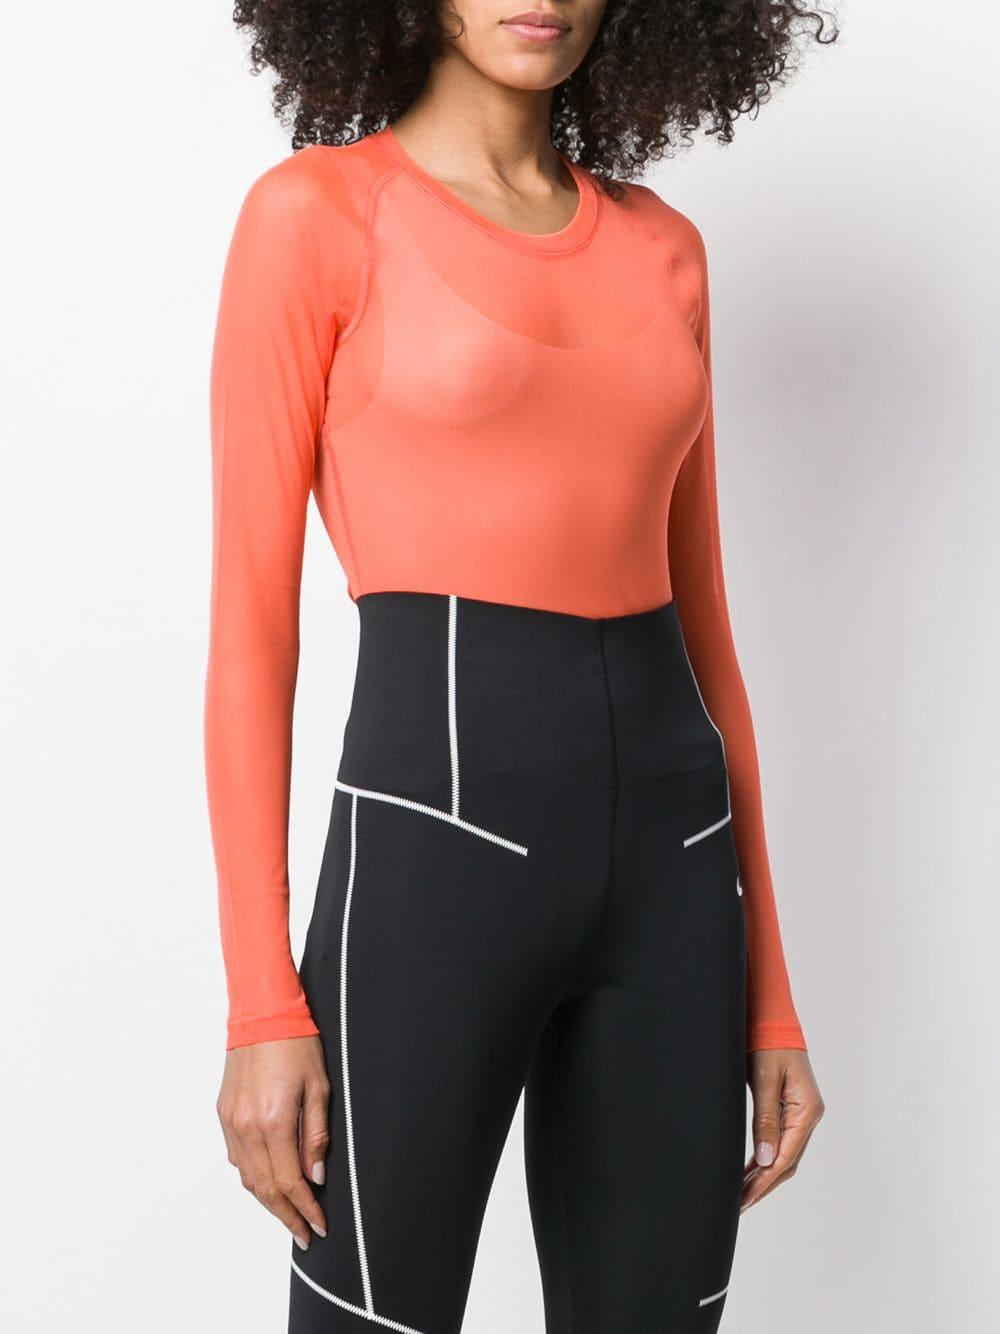 Nike Sheer Bodysuit in Orange | Lyst